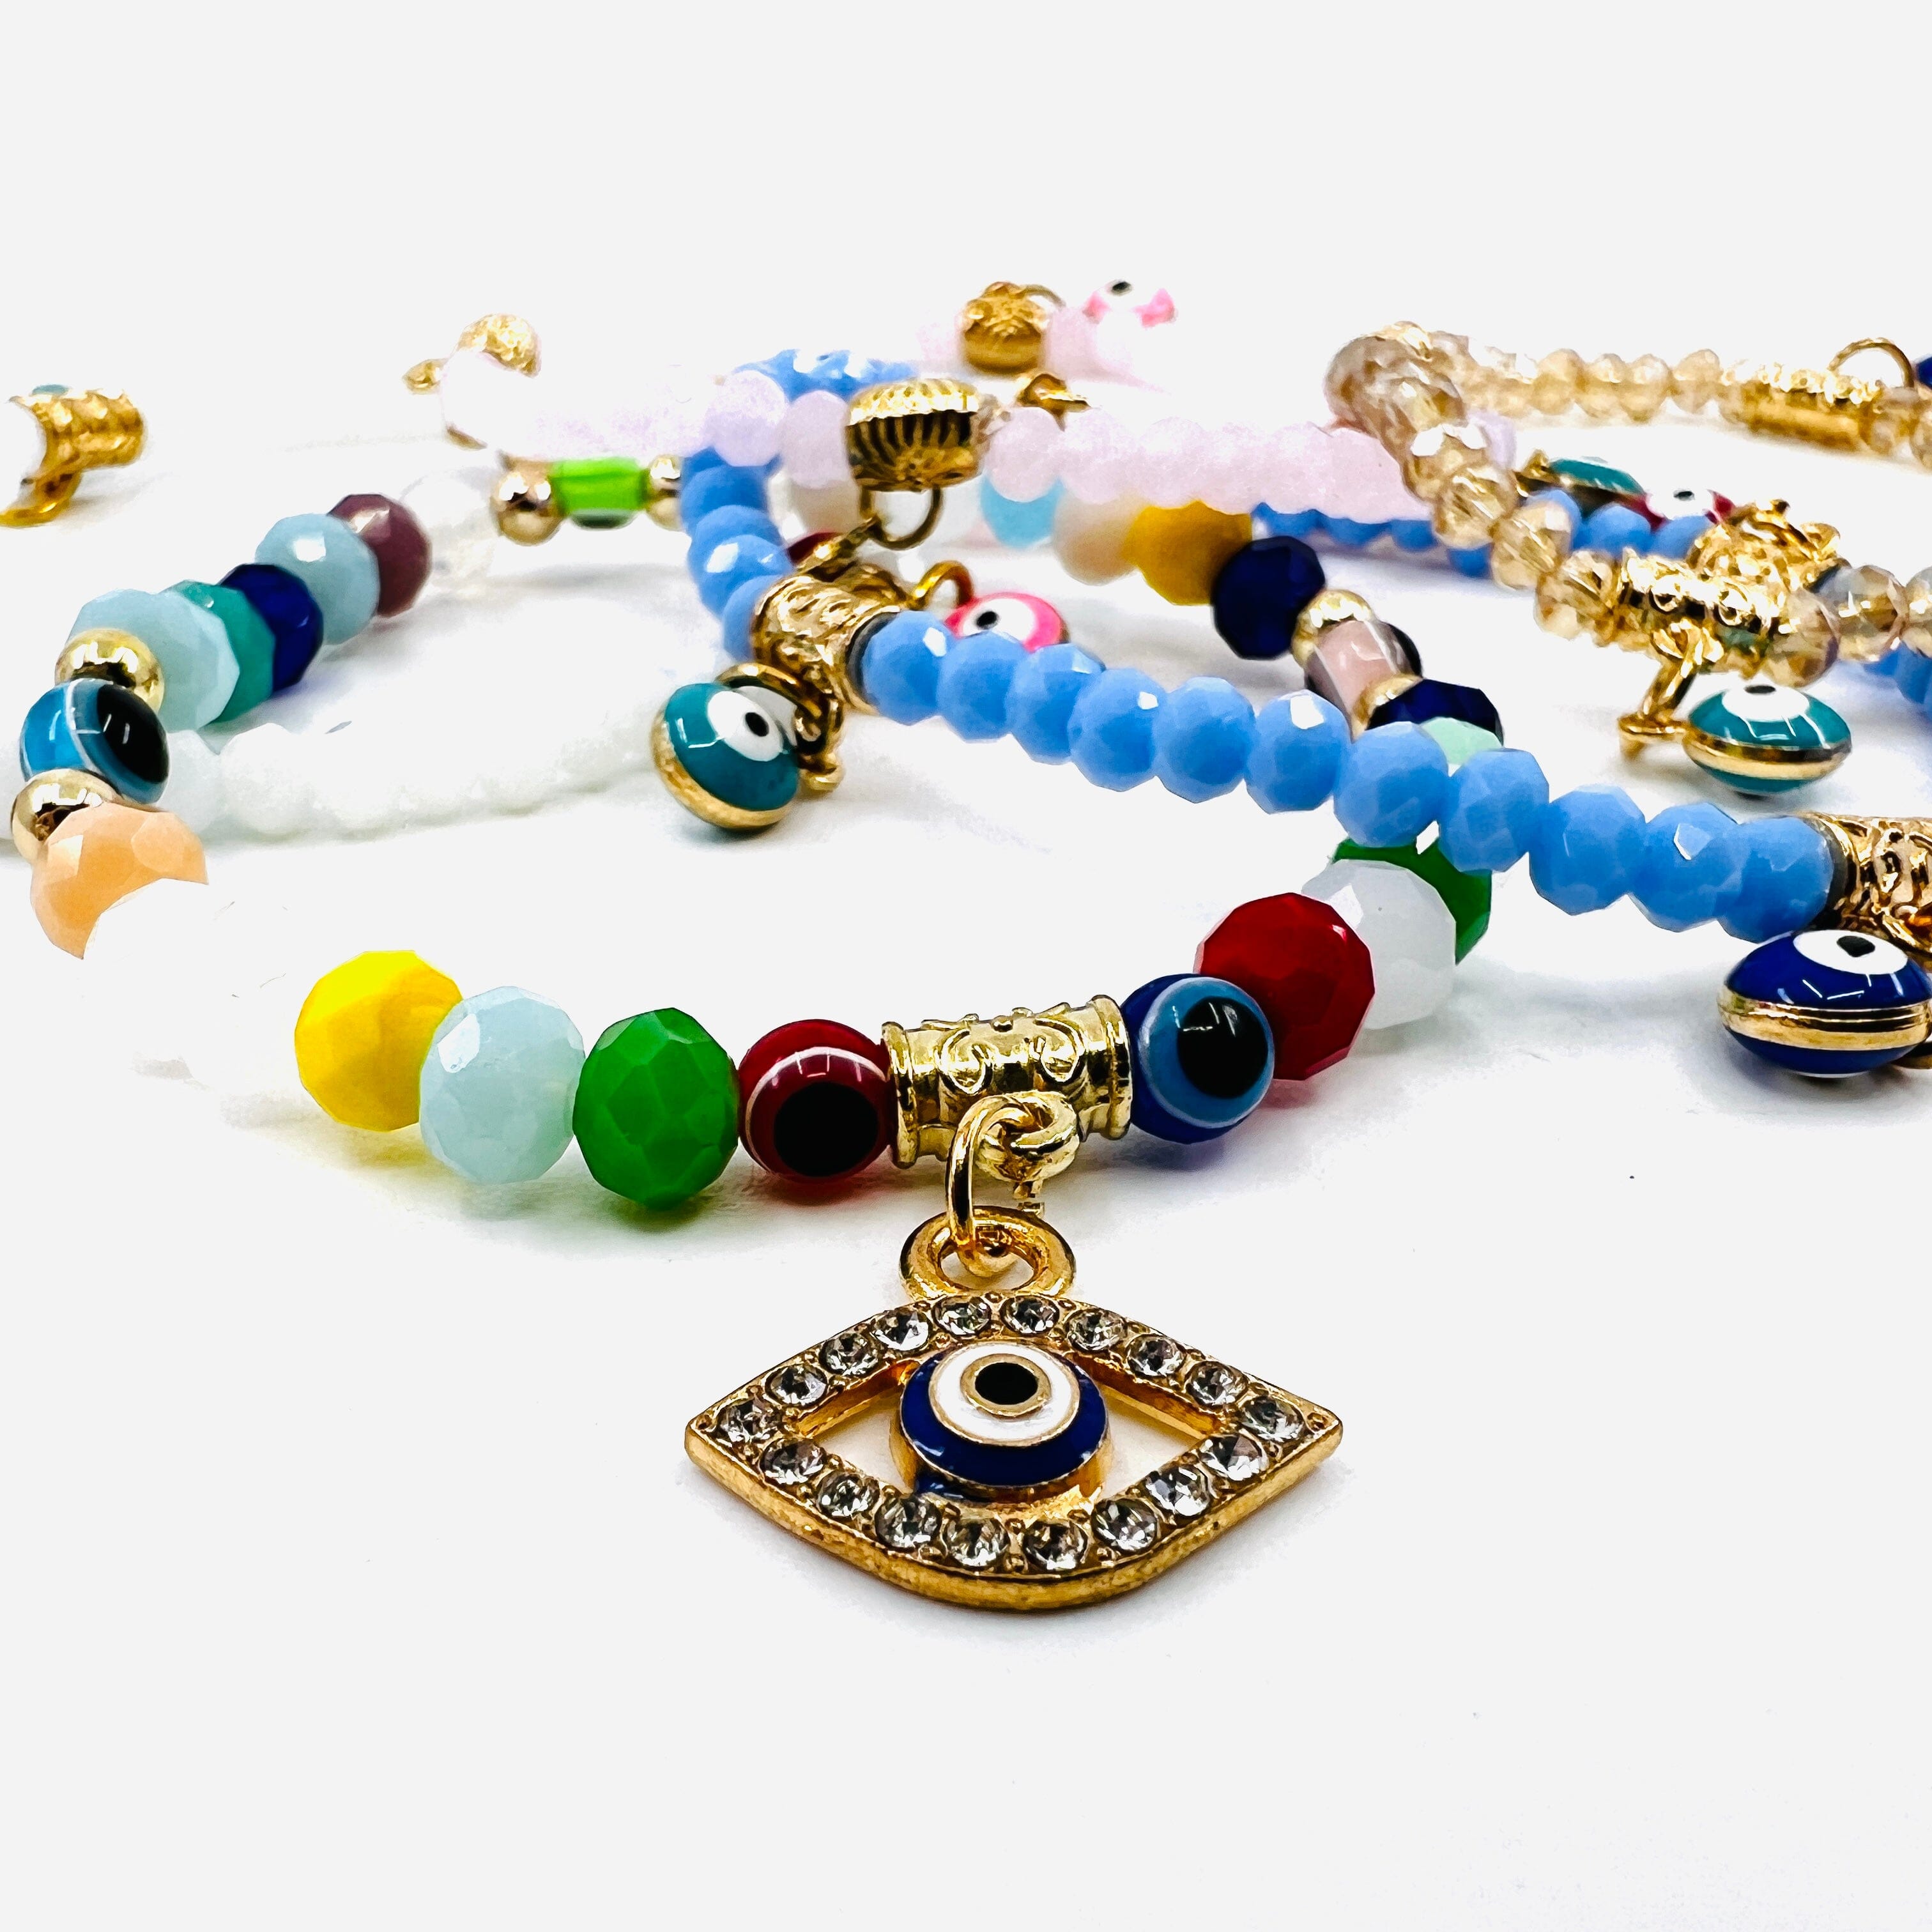 Get Hamsa Evil eye charm bracelet at ₹ 750 | LBB Shop